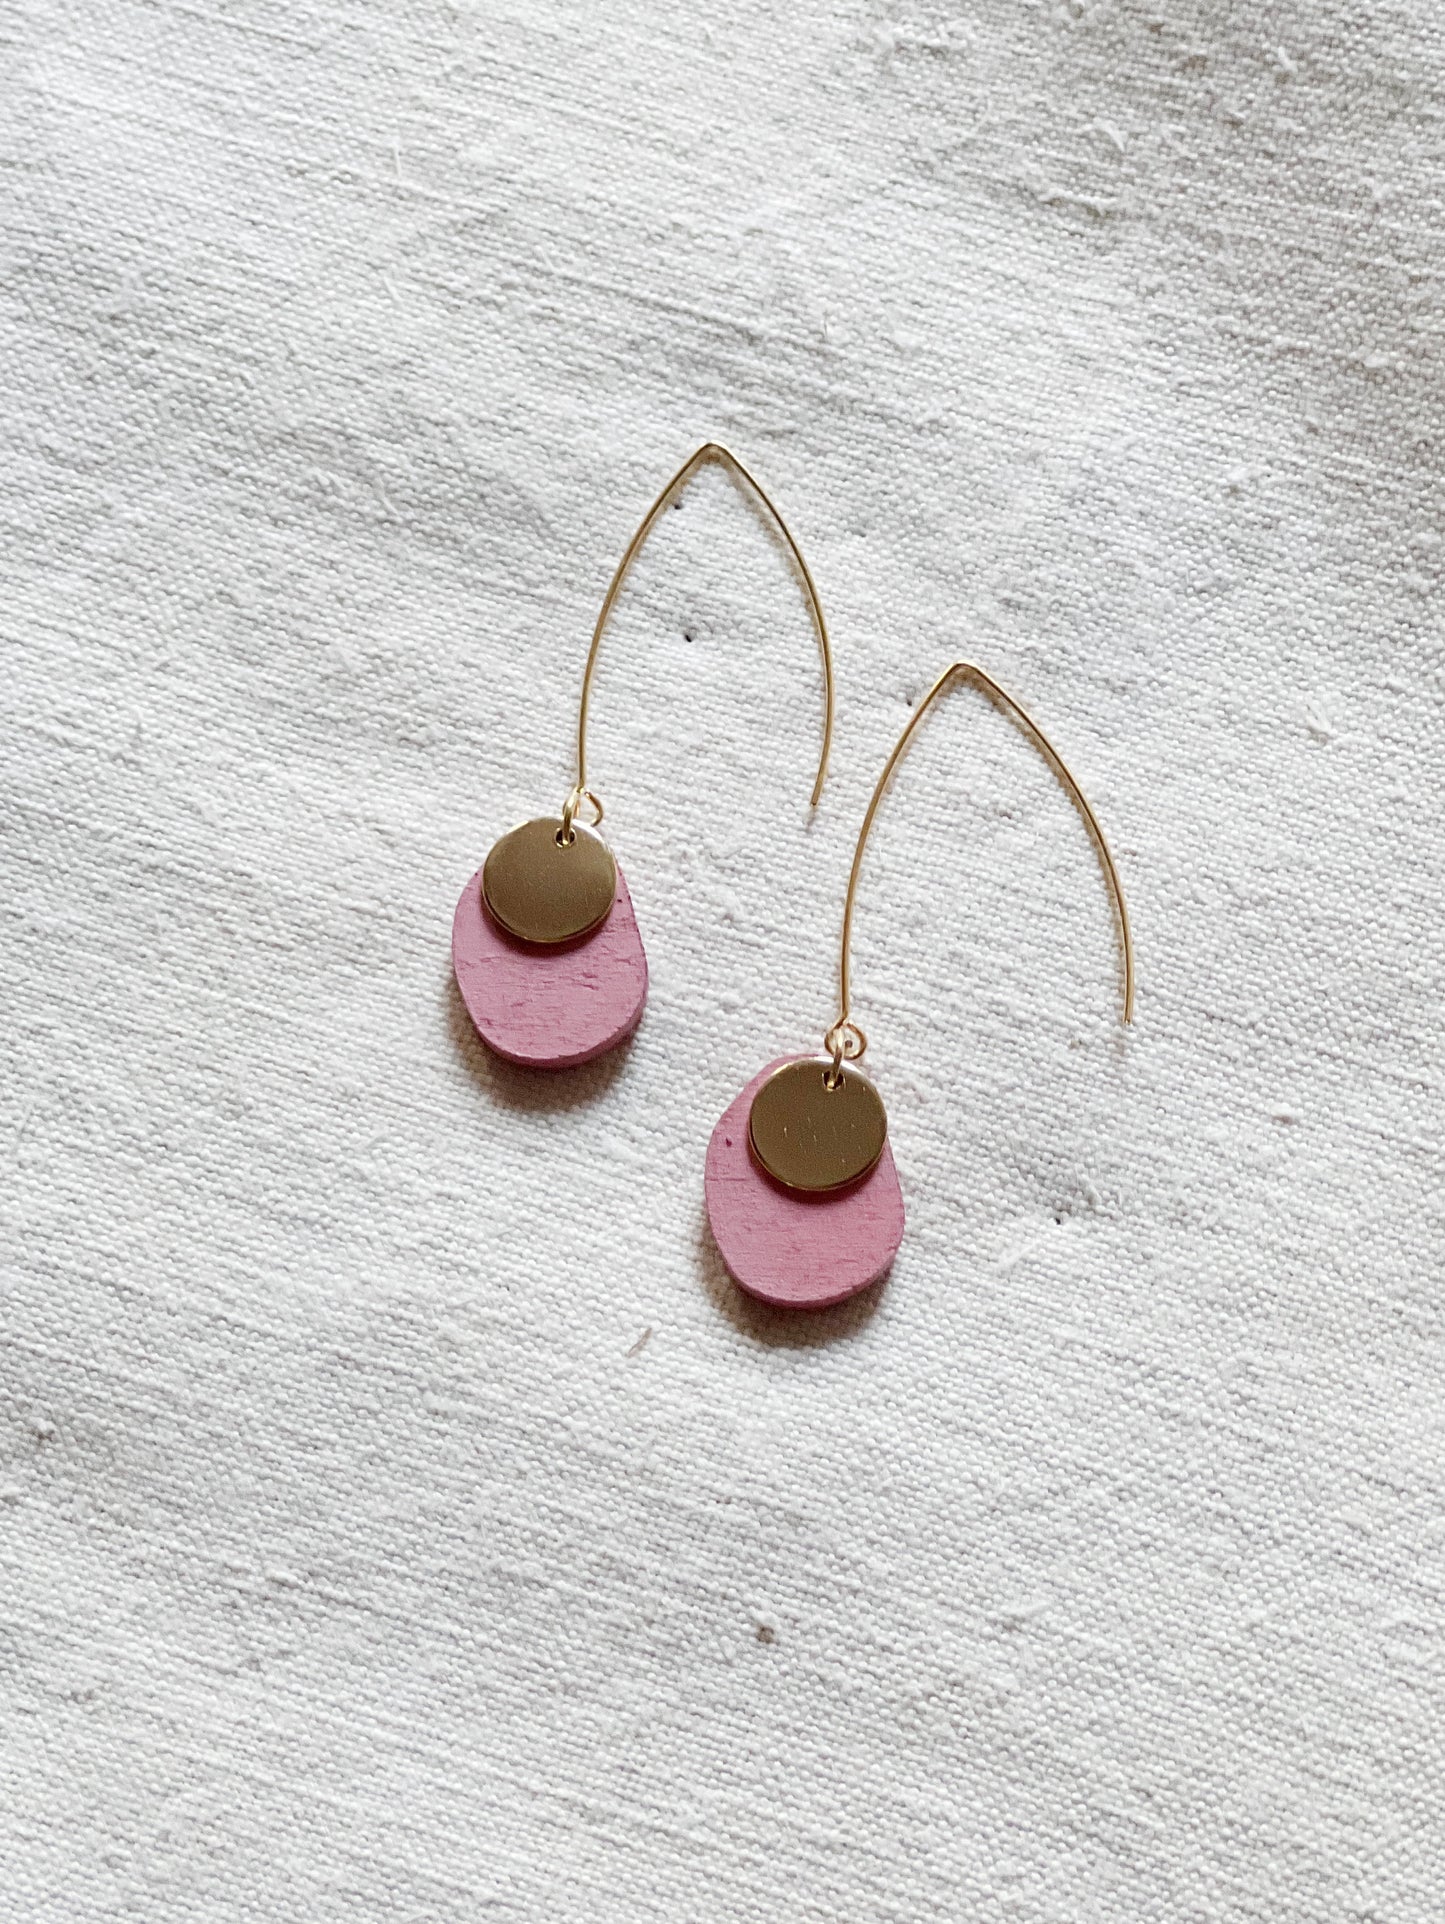 Altan earrings in pink colour